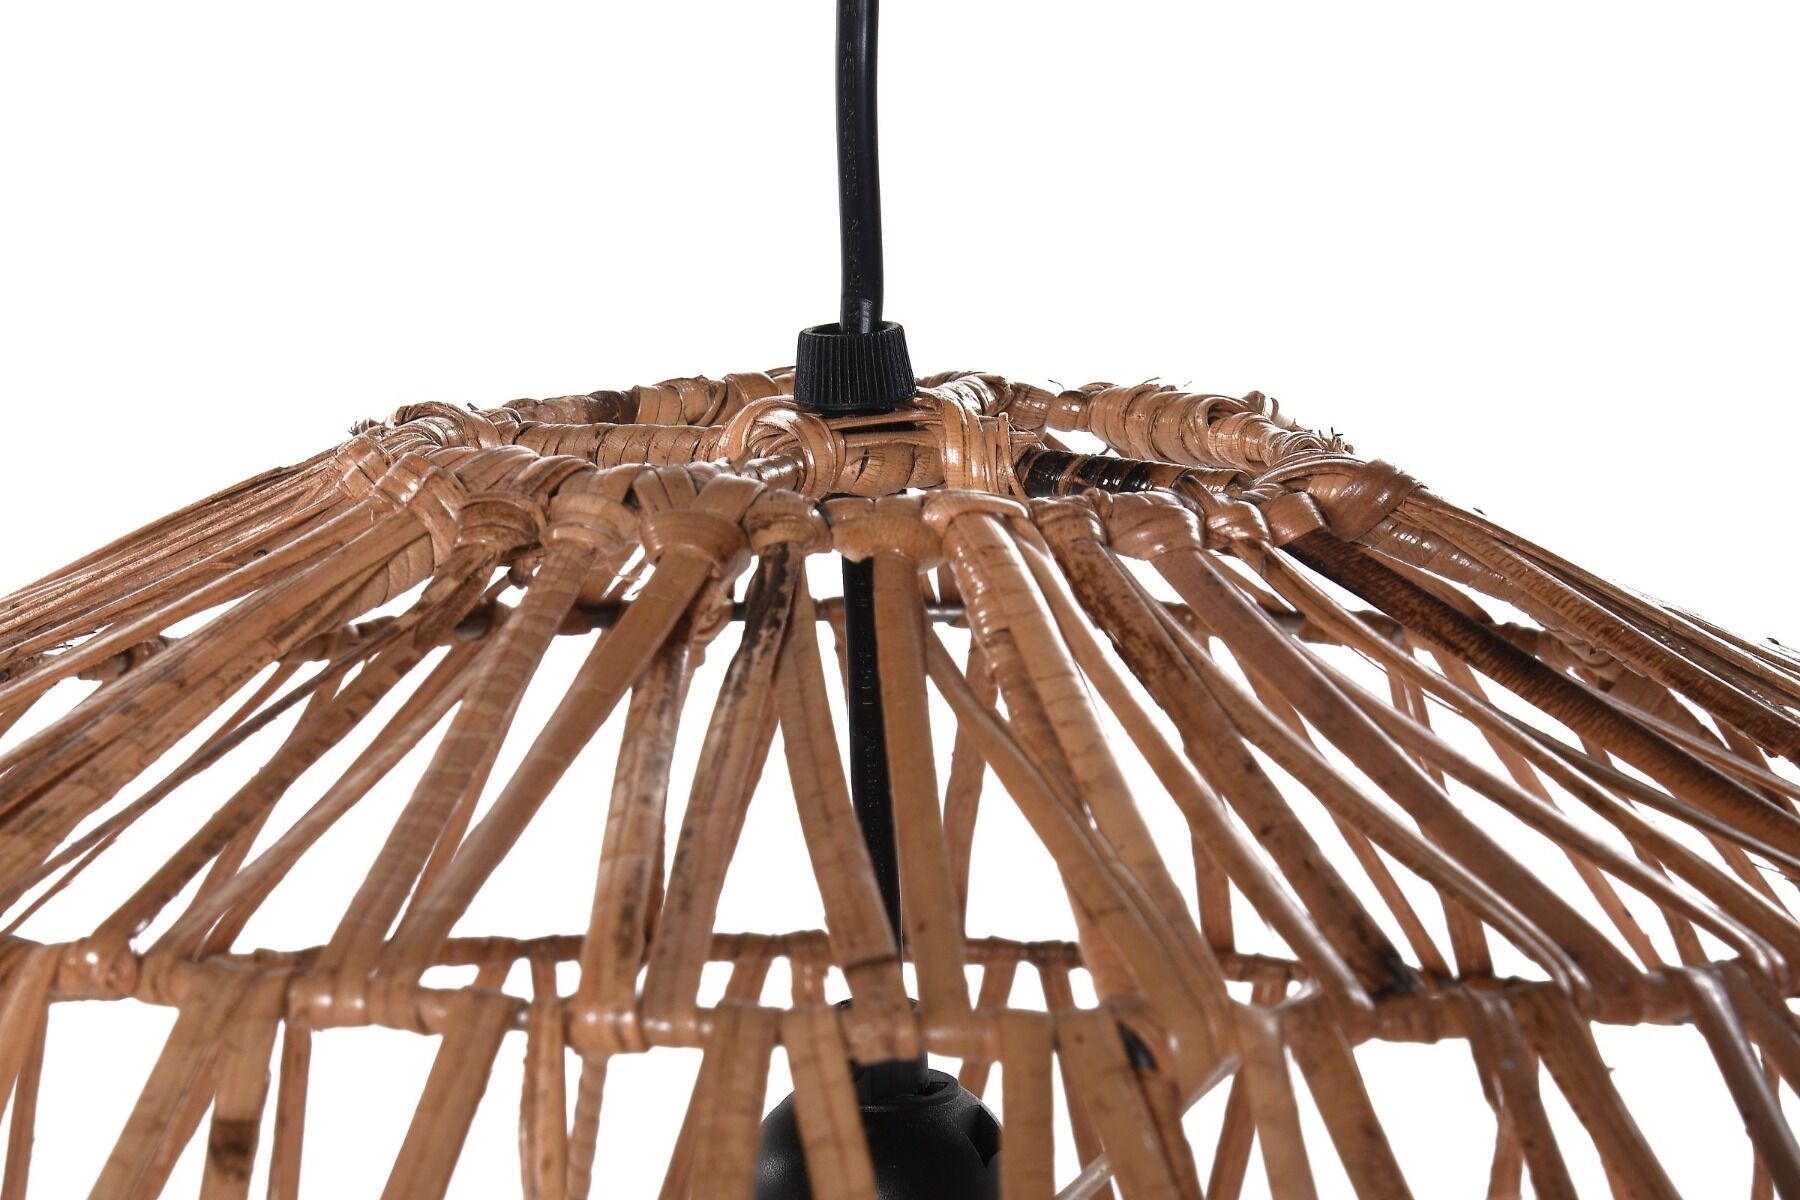 Lampa Rustic Complete 30x30x30cm